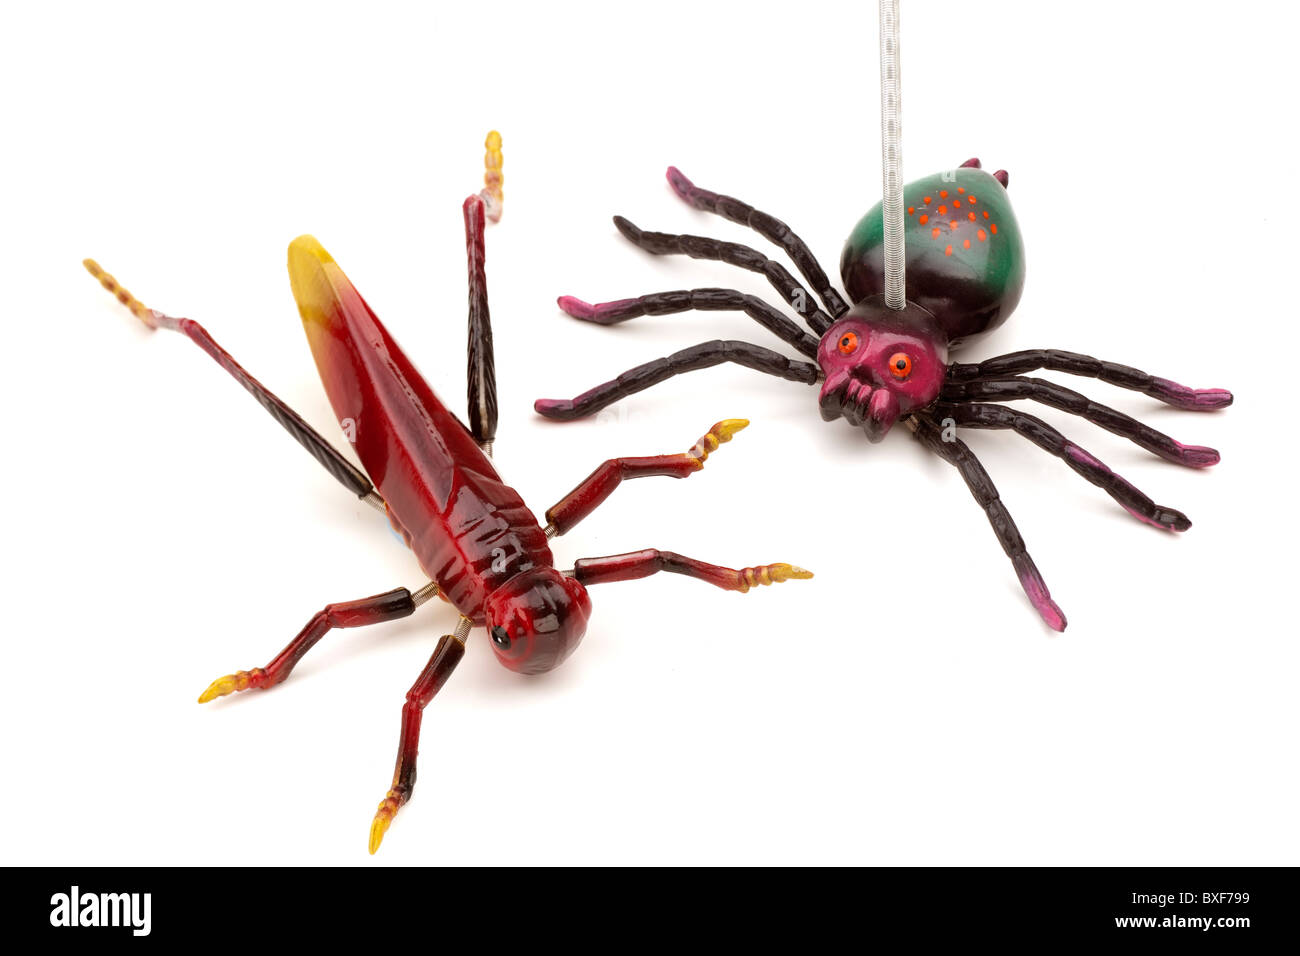 Insectos de juguete Foto de stock